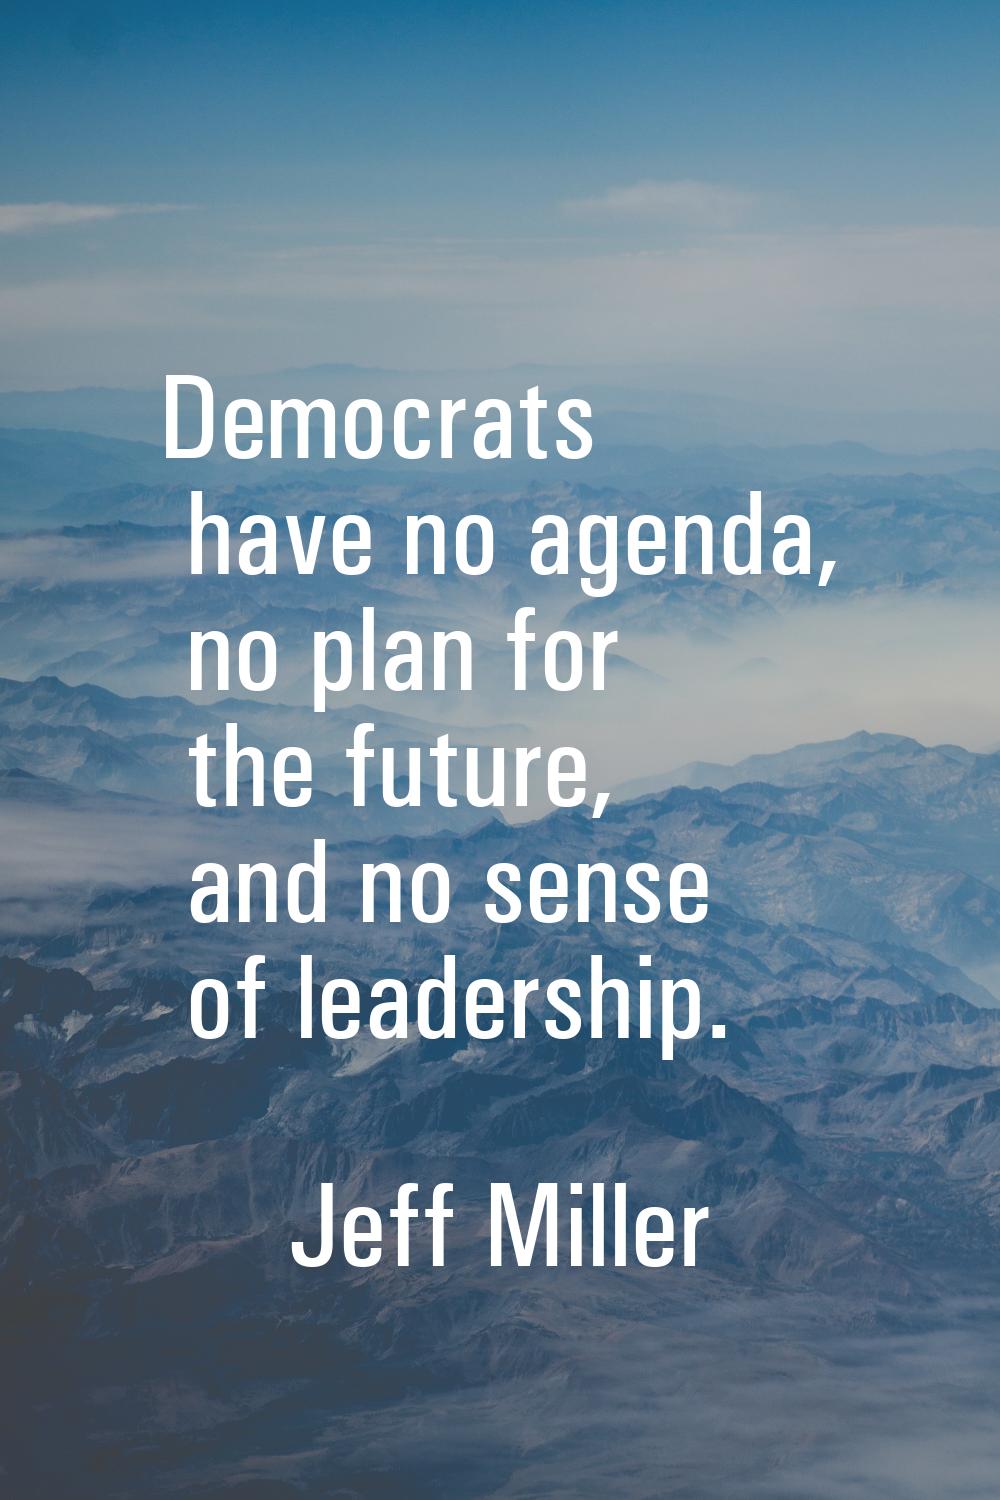 Democrats have no agenda, no plan for the future, and no sense of leadership.